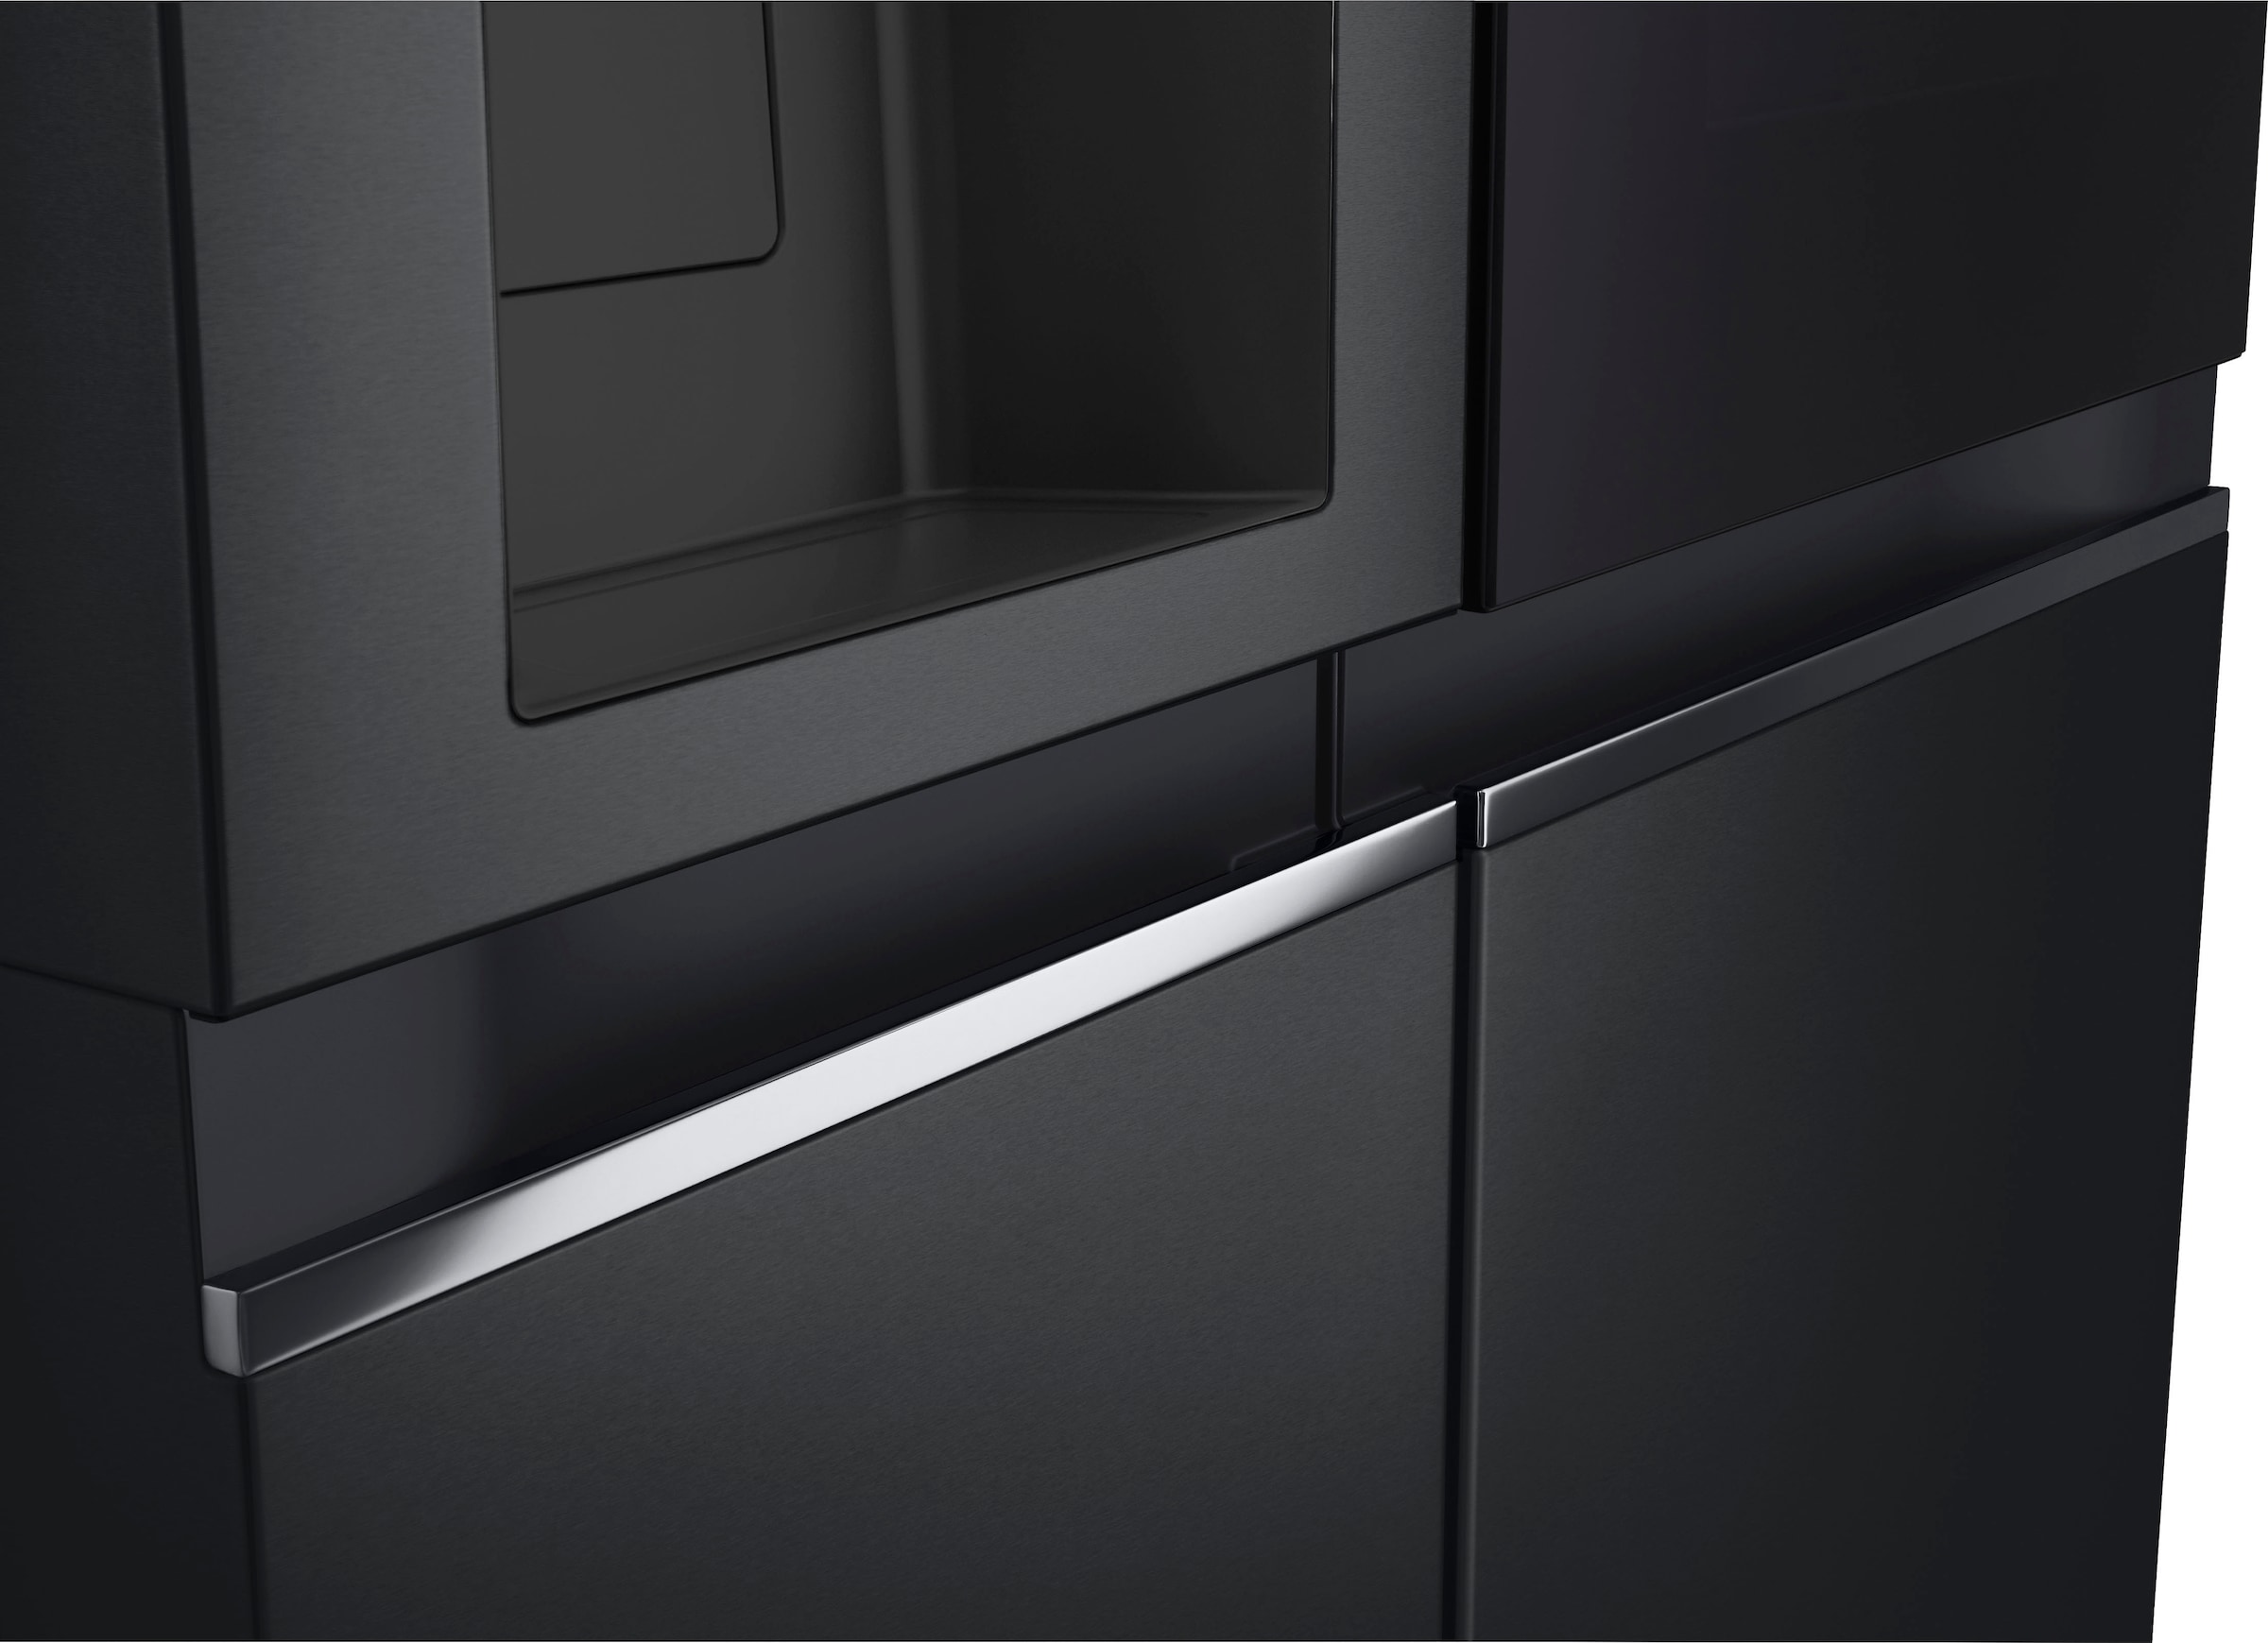 LG Side-by-Side, GSGV81EPLL, 179 cm hoch, 91,3 cm breit, 4 Jahre Garantie  inklusive online bei | Side-by-Side Kühlschränke